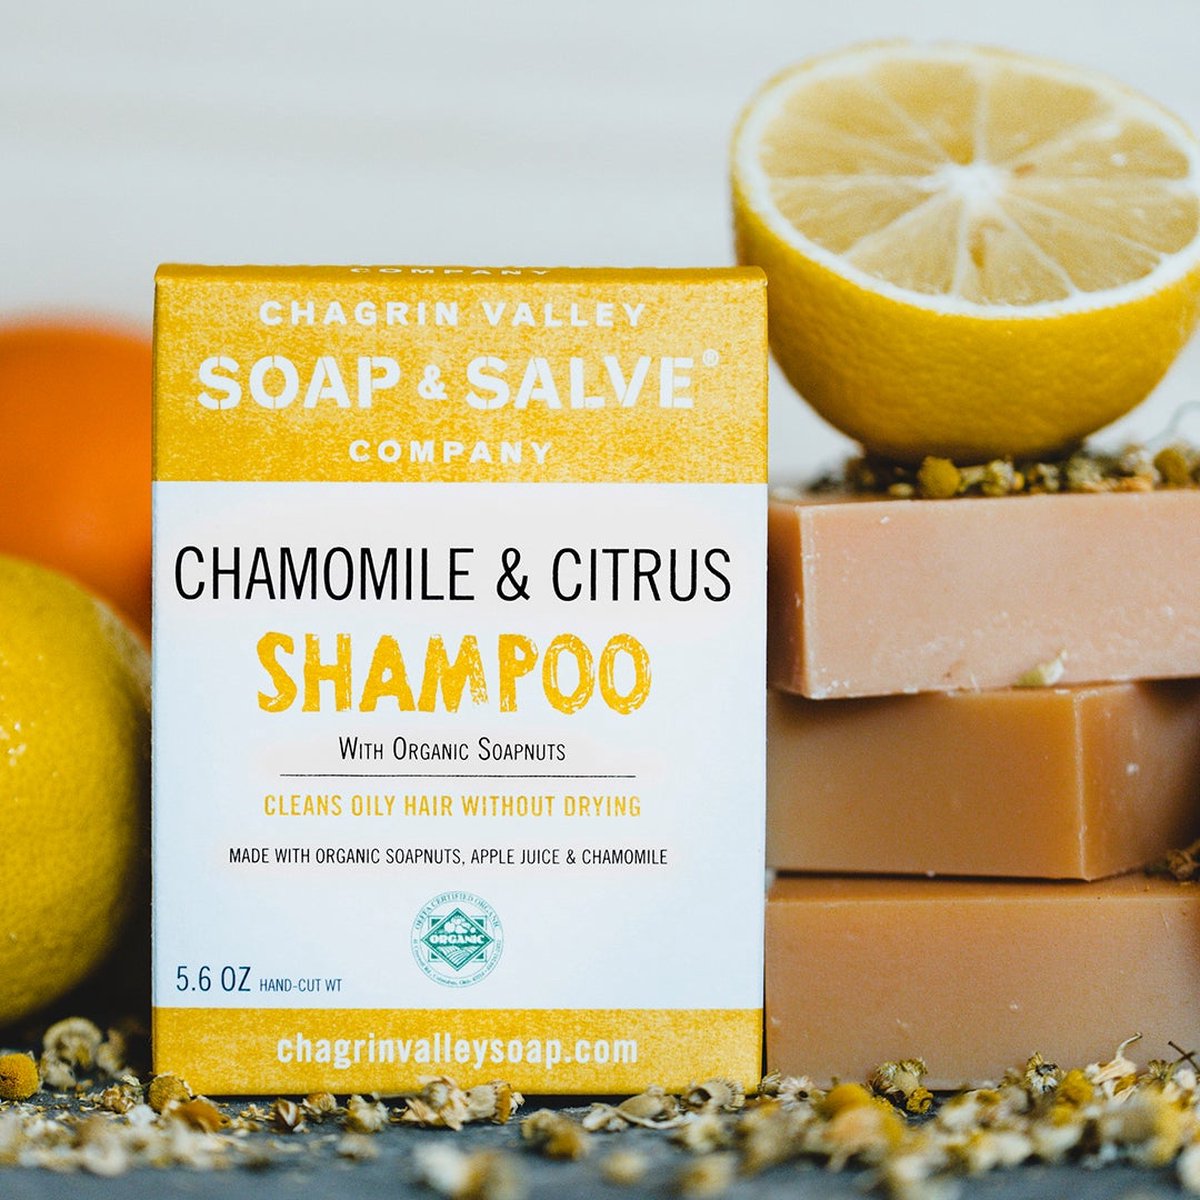 Gift Set – 100 % Natuurlijke Kamille & Citrus Shampoo Bar met duurzaam houten zeepbakje - Chagrin Valley - Gift set - Natural –- luxury Shampoo – Aanbieding !!!